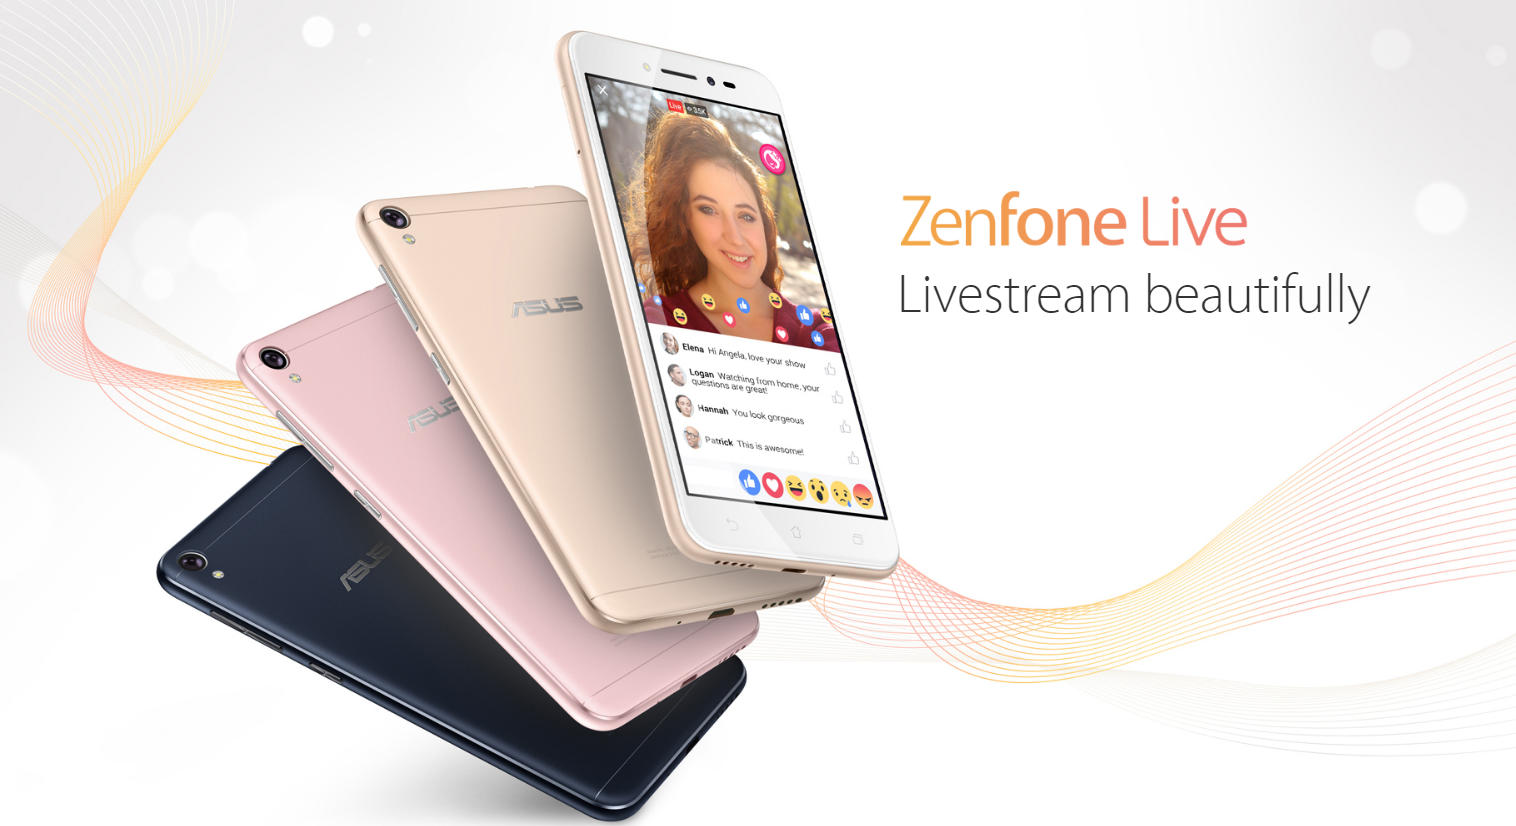 ASUS Zenfone Live เปิดราคา 4,990 บาท ชูจุดขาย BeautyLive จะเปิด Live บน Facebook, YouTube ก็หน้าเนียนใส